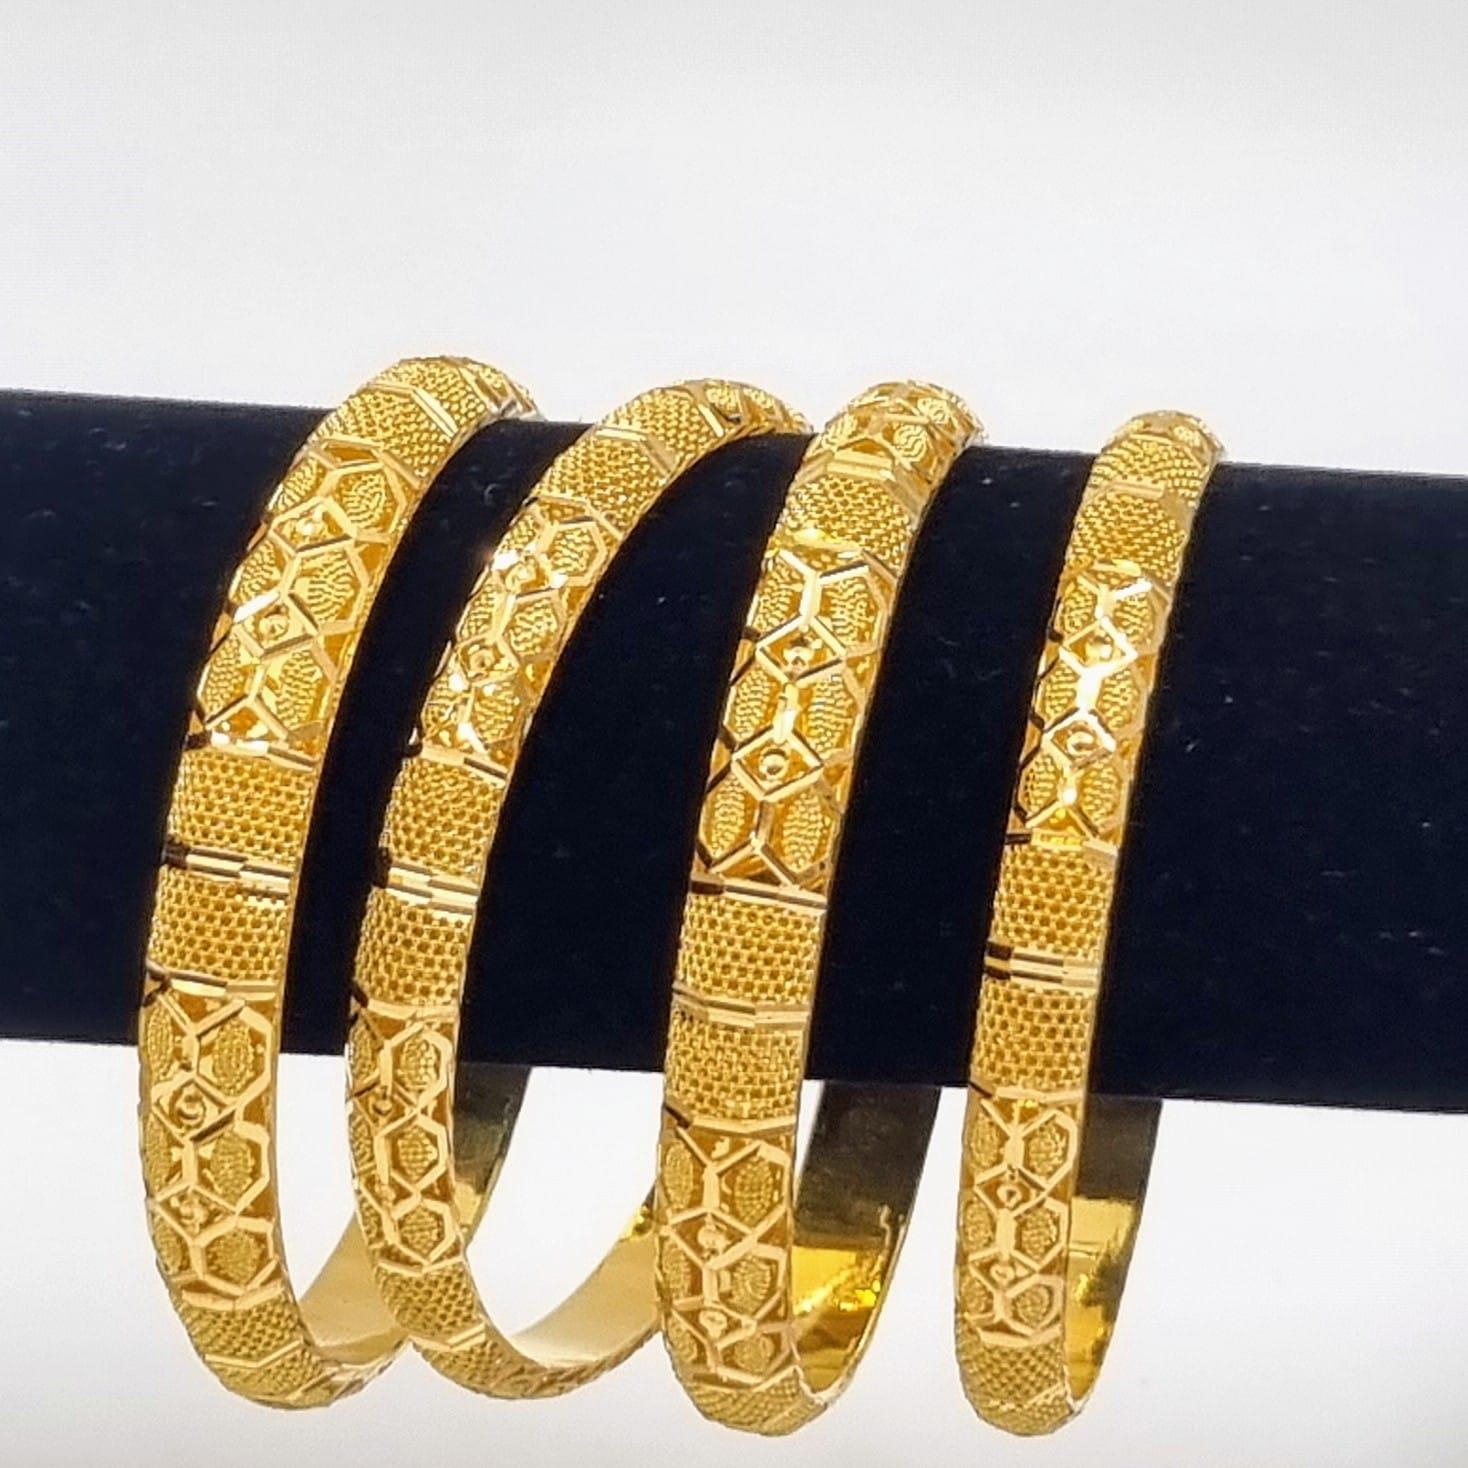 Four 22k Yellow Gold Asian Wedding Bangles. Geometric pierced decoration throughout. 6.5cm inner